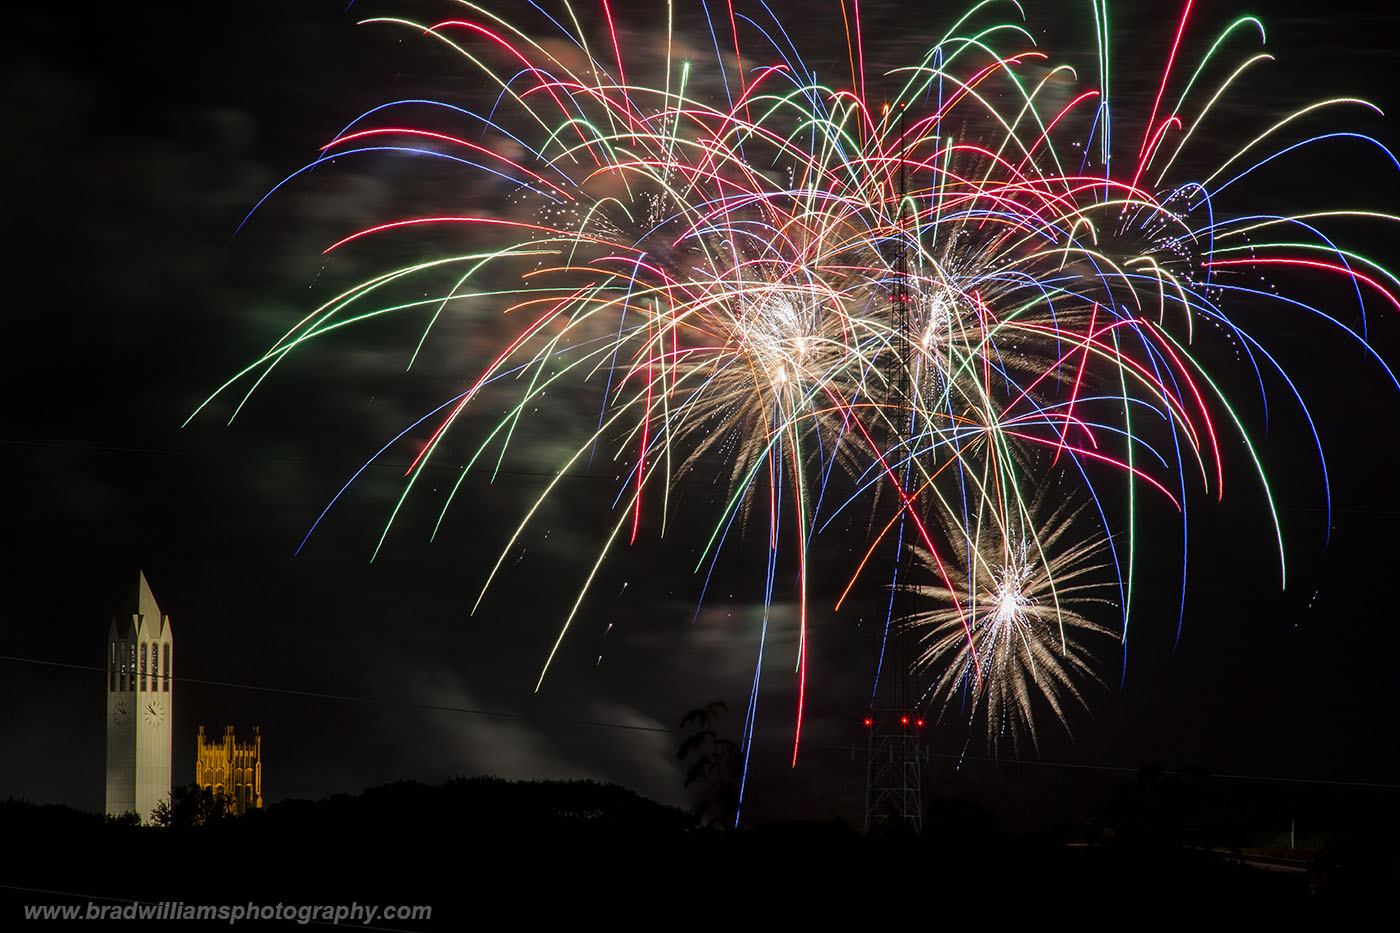 The 2016 Memorial Park Fireworks in Omaha, Nebraska